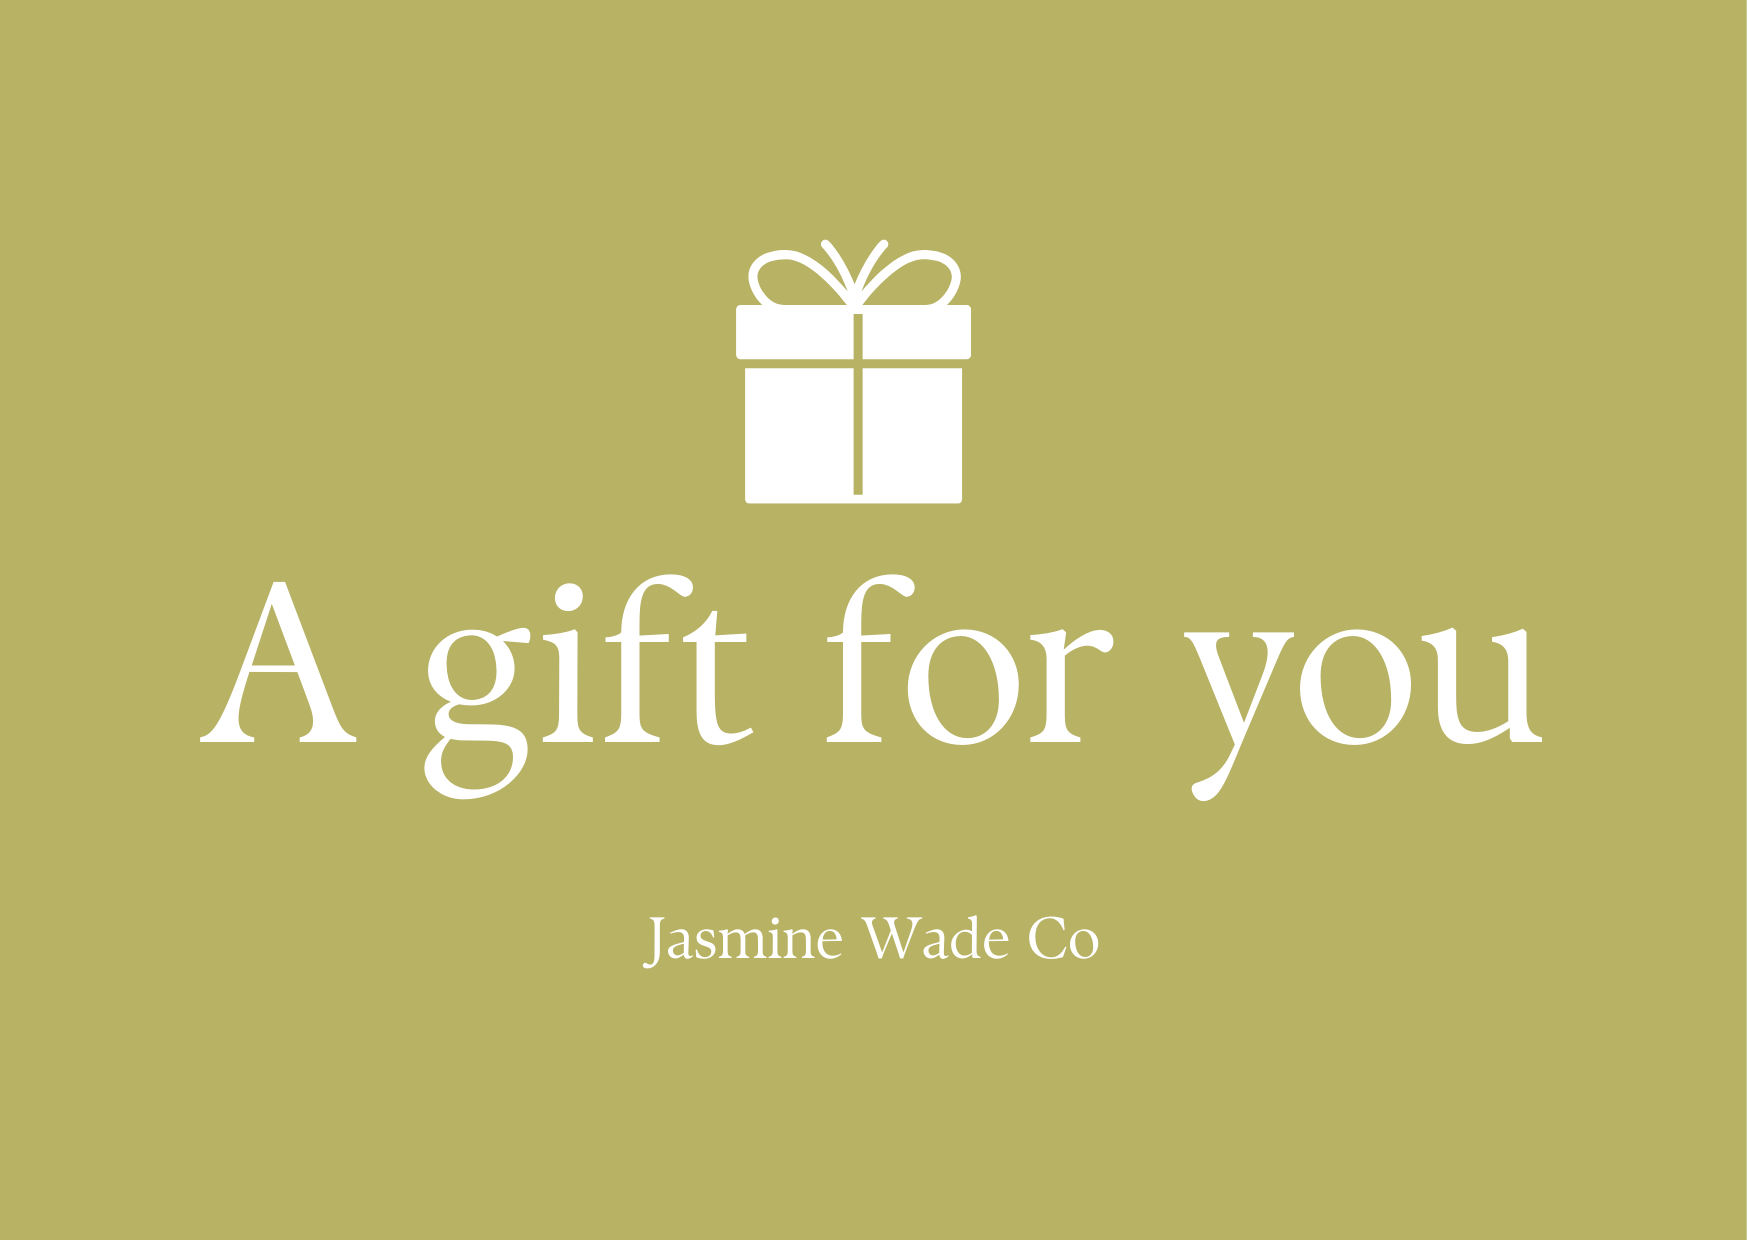 Jasmine Wade Co Gift Card